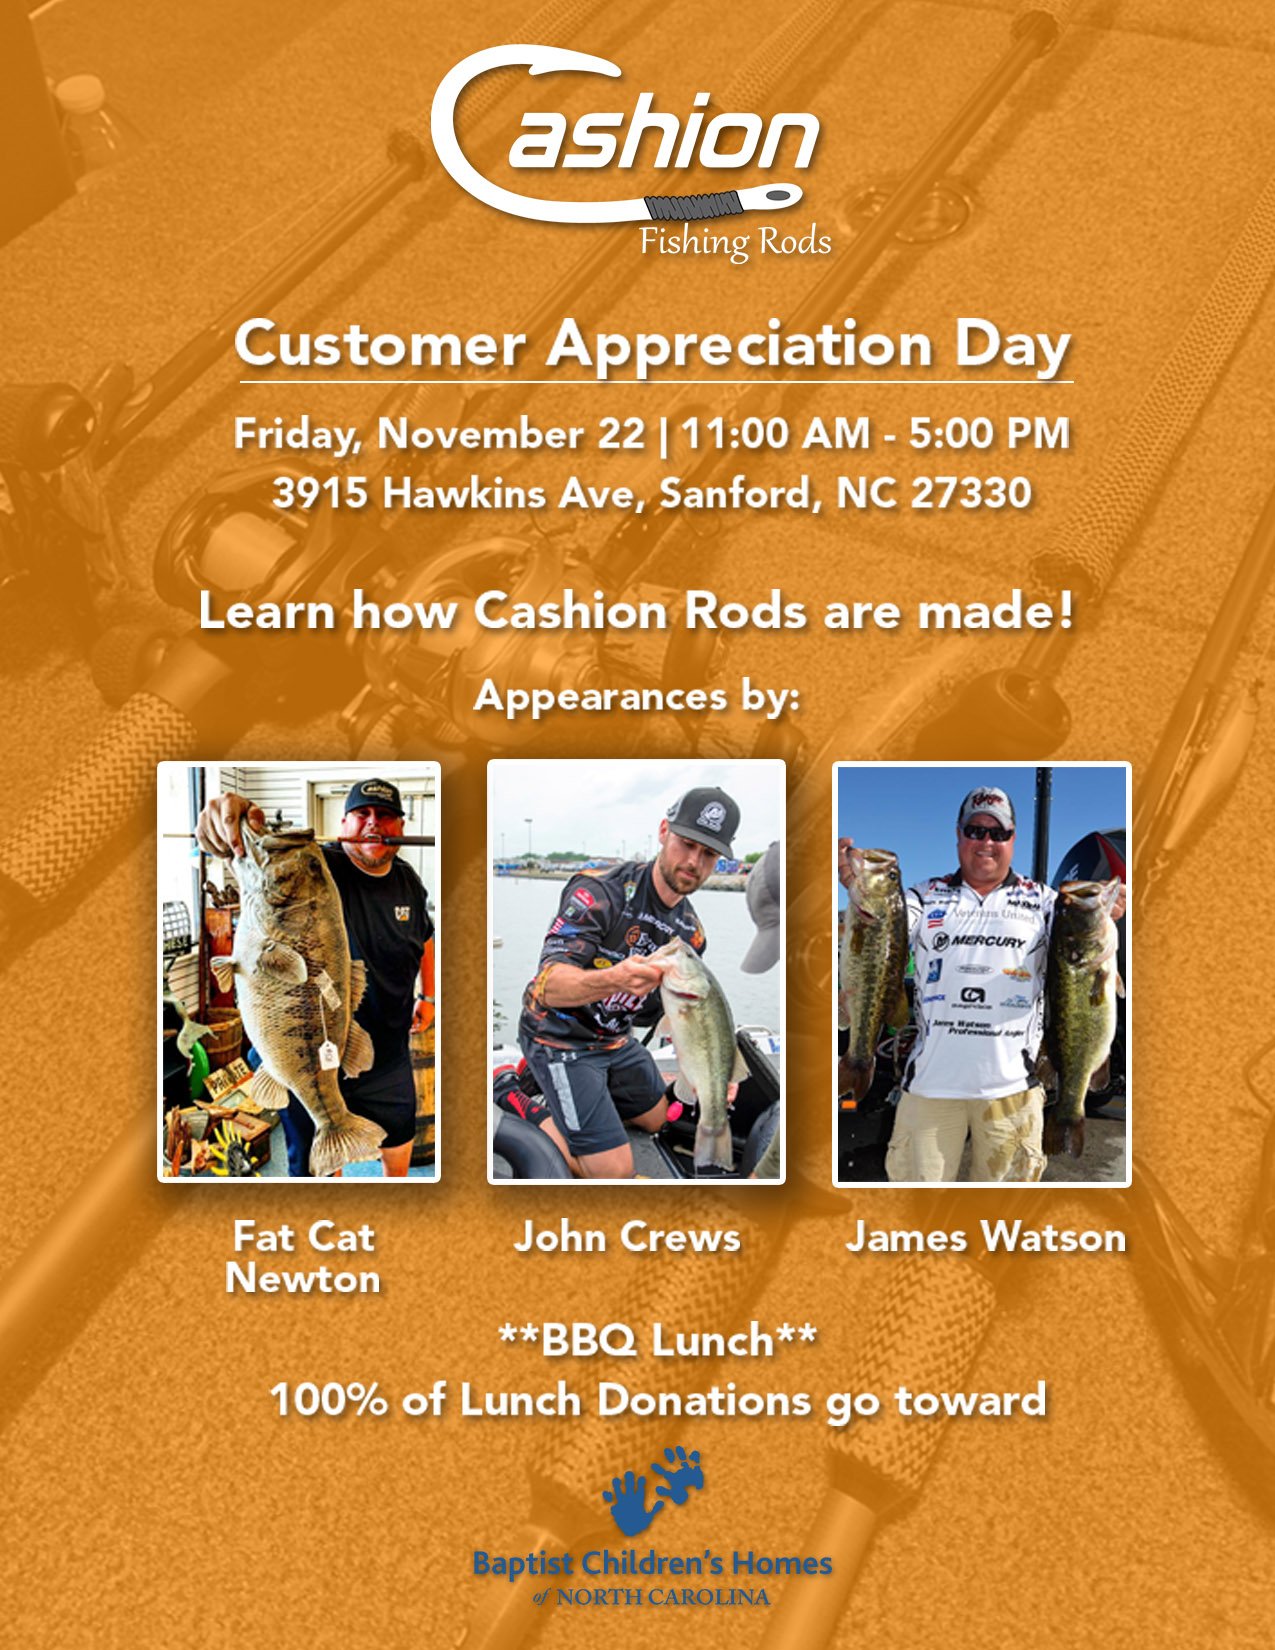 Cashion Fishing Rods Customer Appreciation Day this Saturday